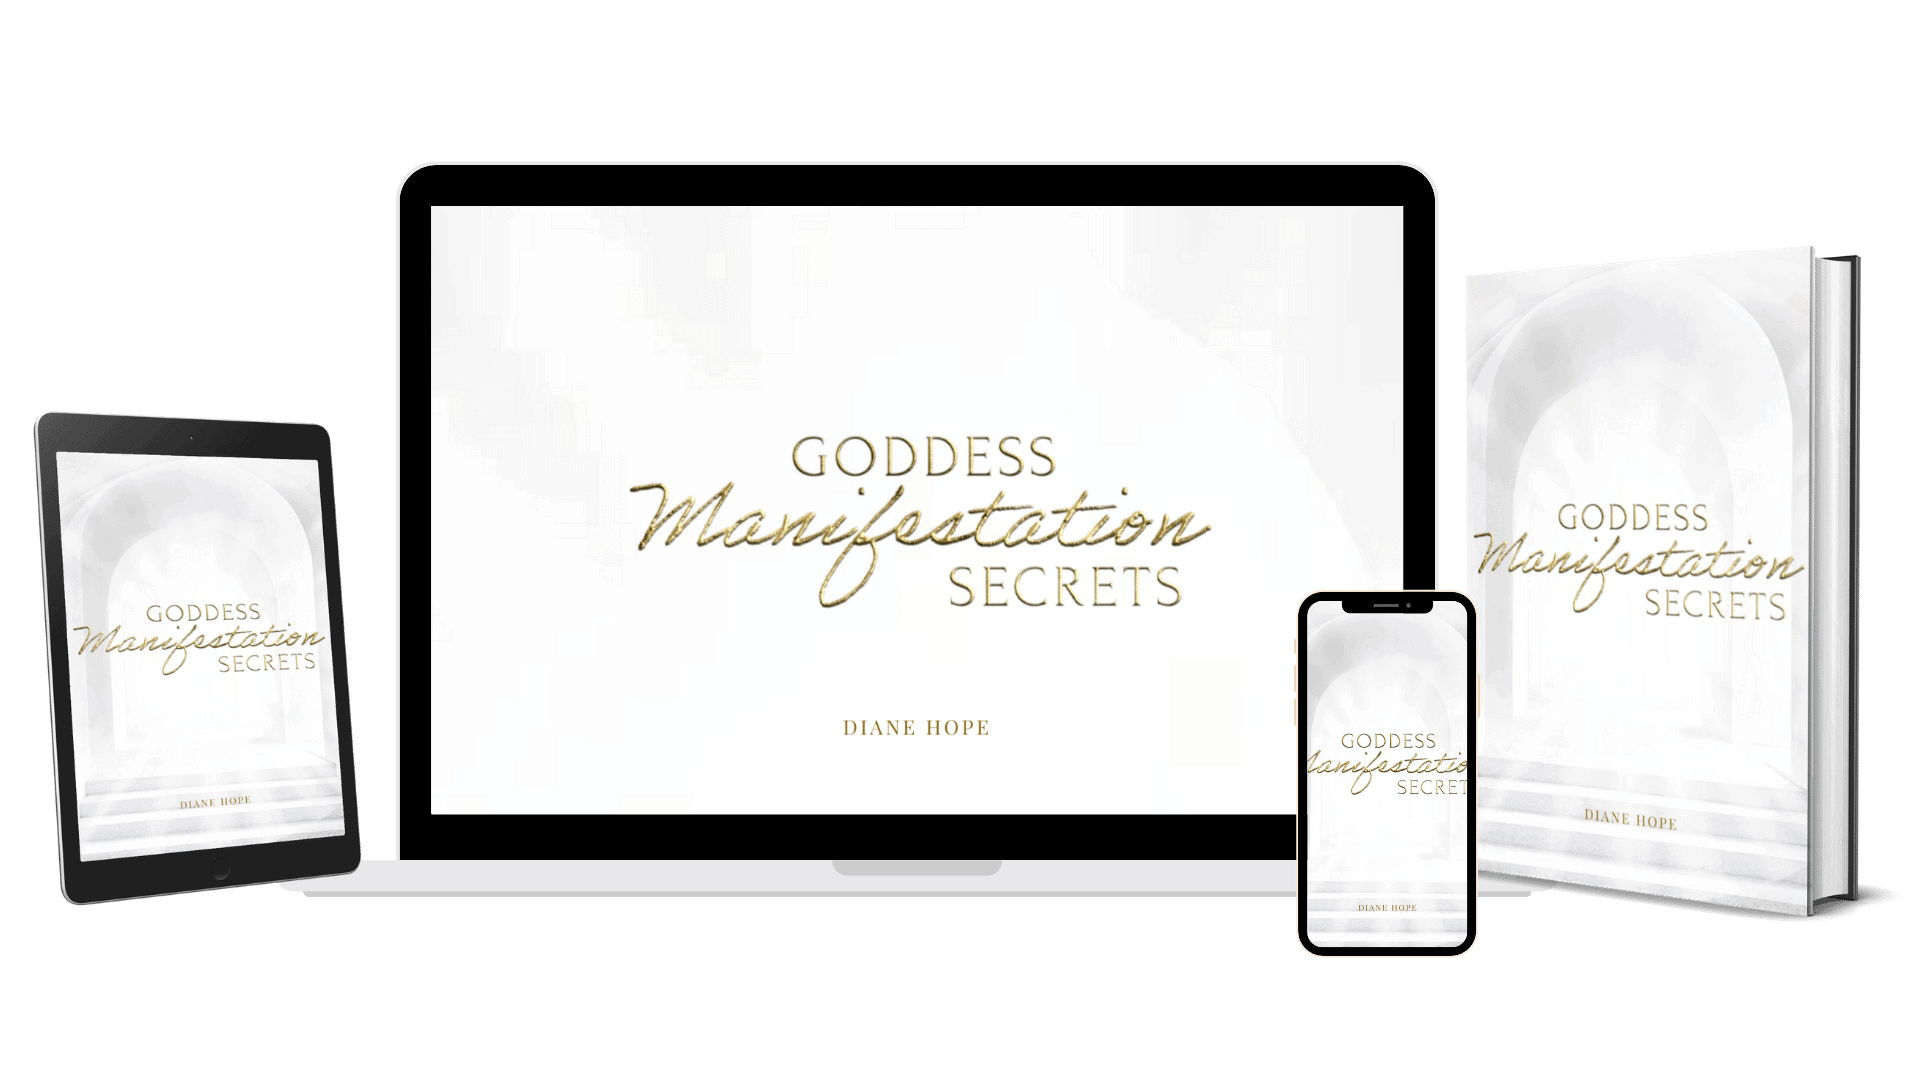 Goddess Manifestation Secrets Handbook